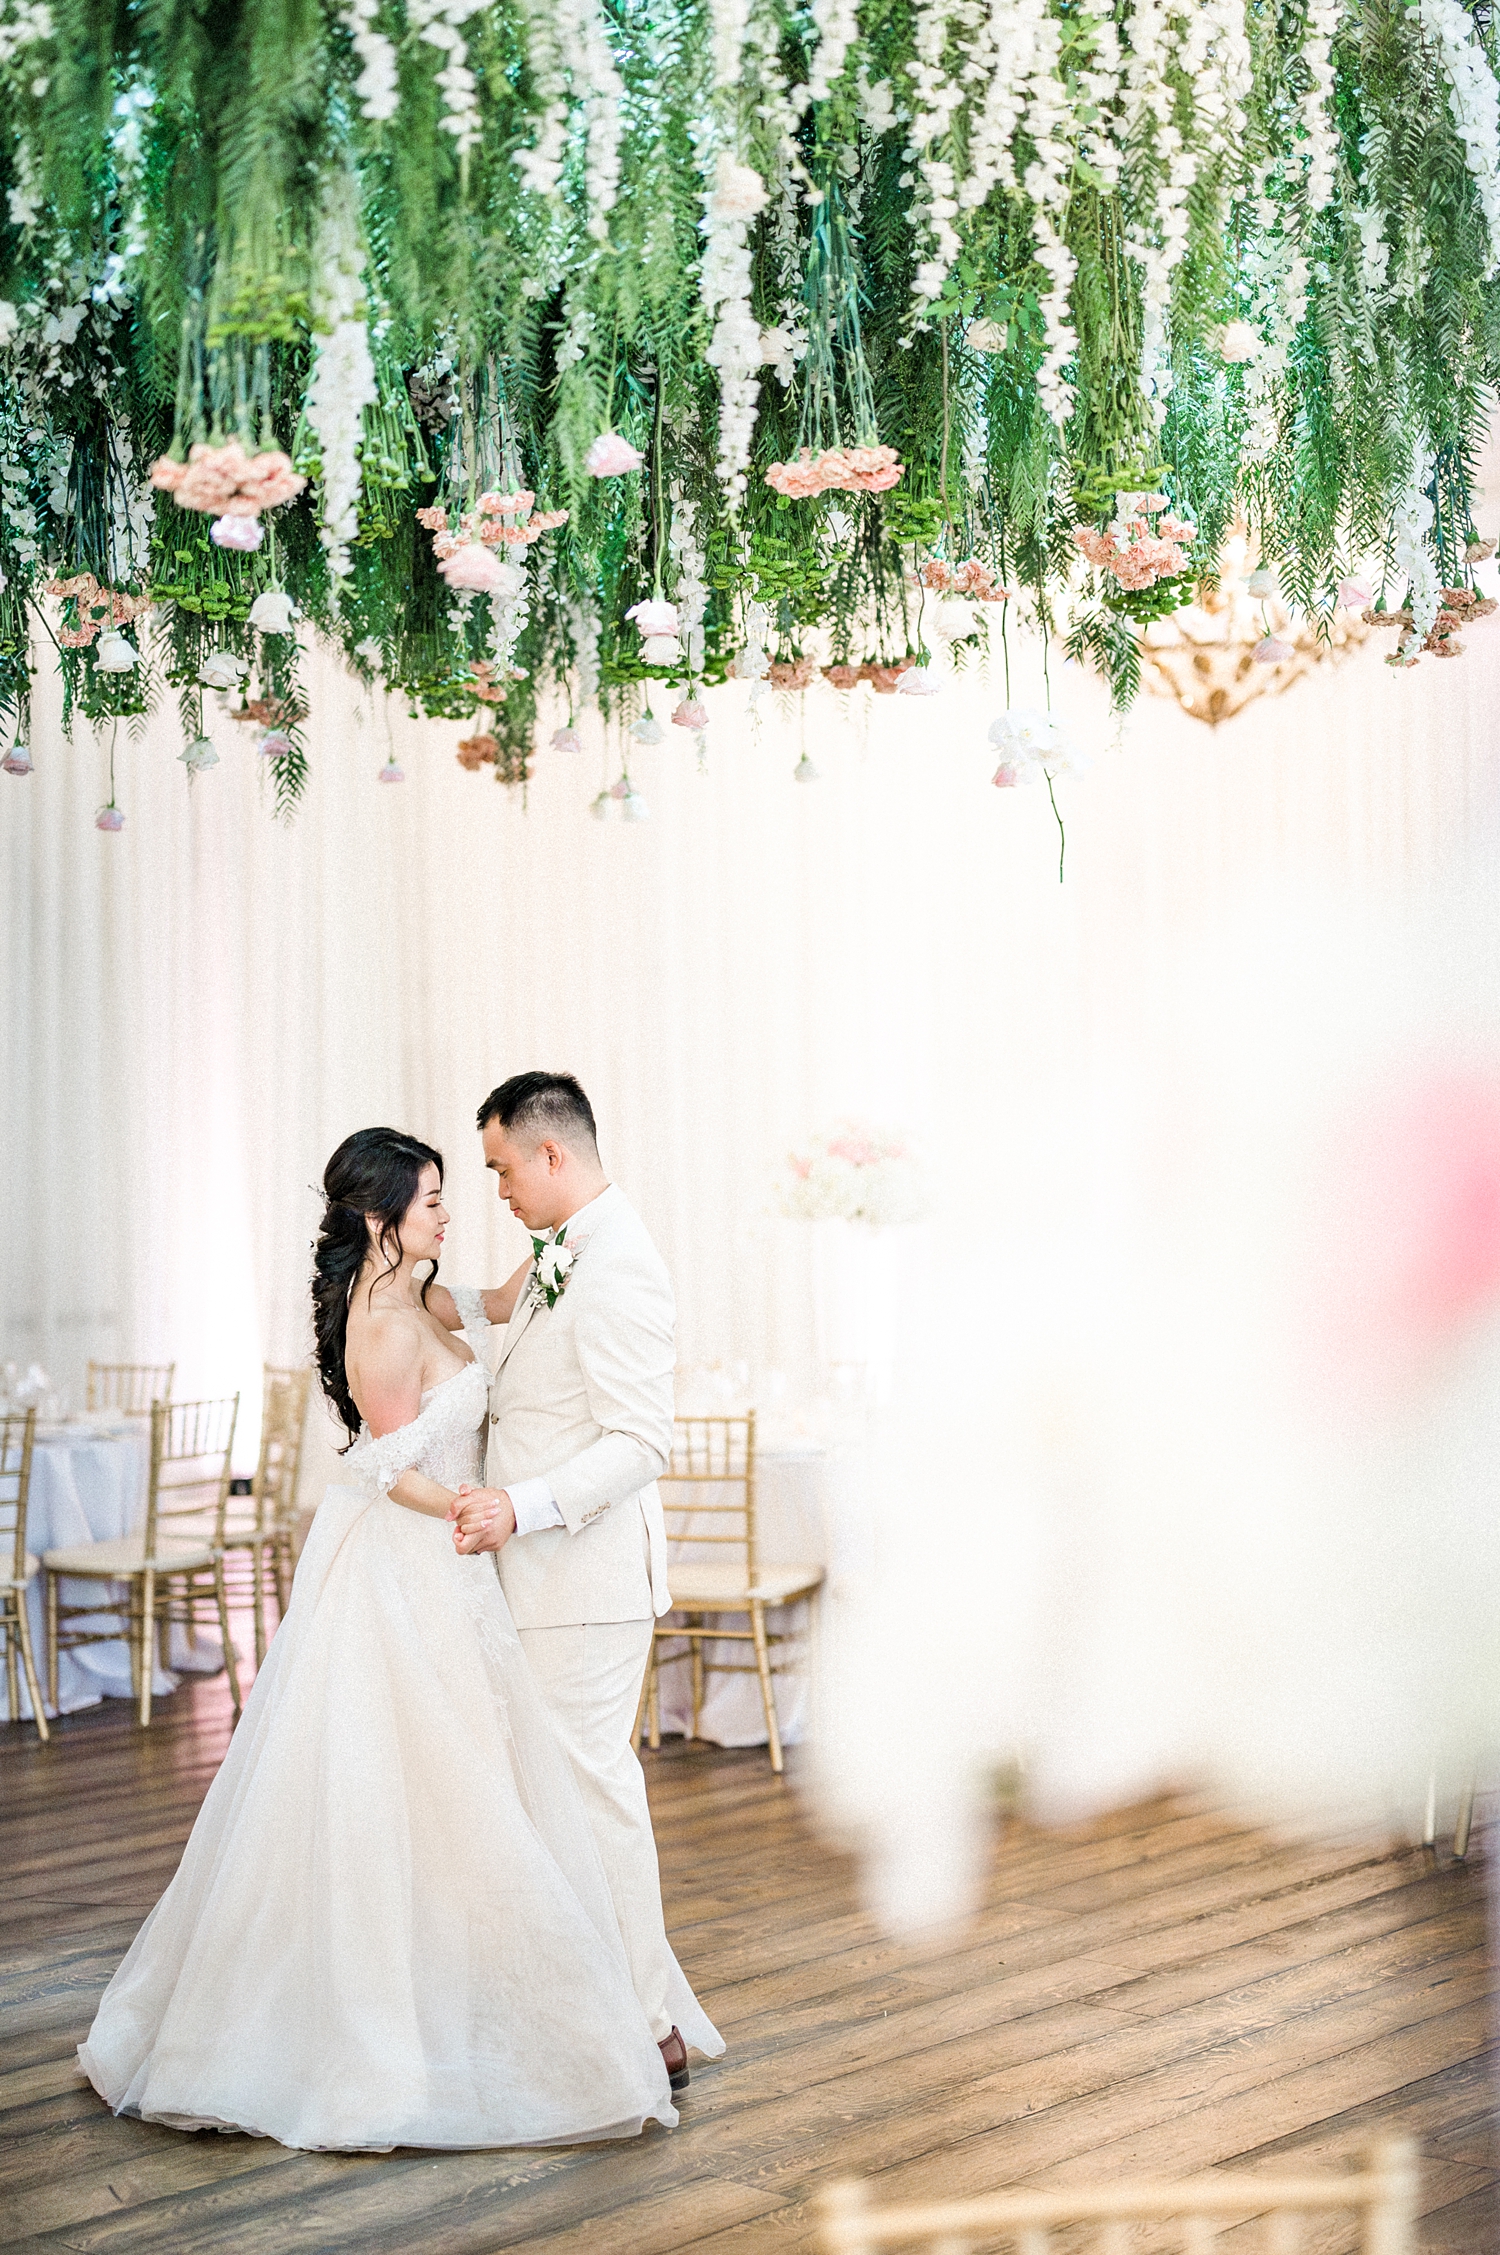 Chinese Tea Ceremony | Romantic Garden Wedding | OC Wedding Photographer | The Villa Westminster-115| Nataly Hernandez Photography | Diana + Byron.jpg